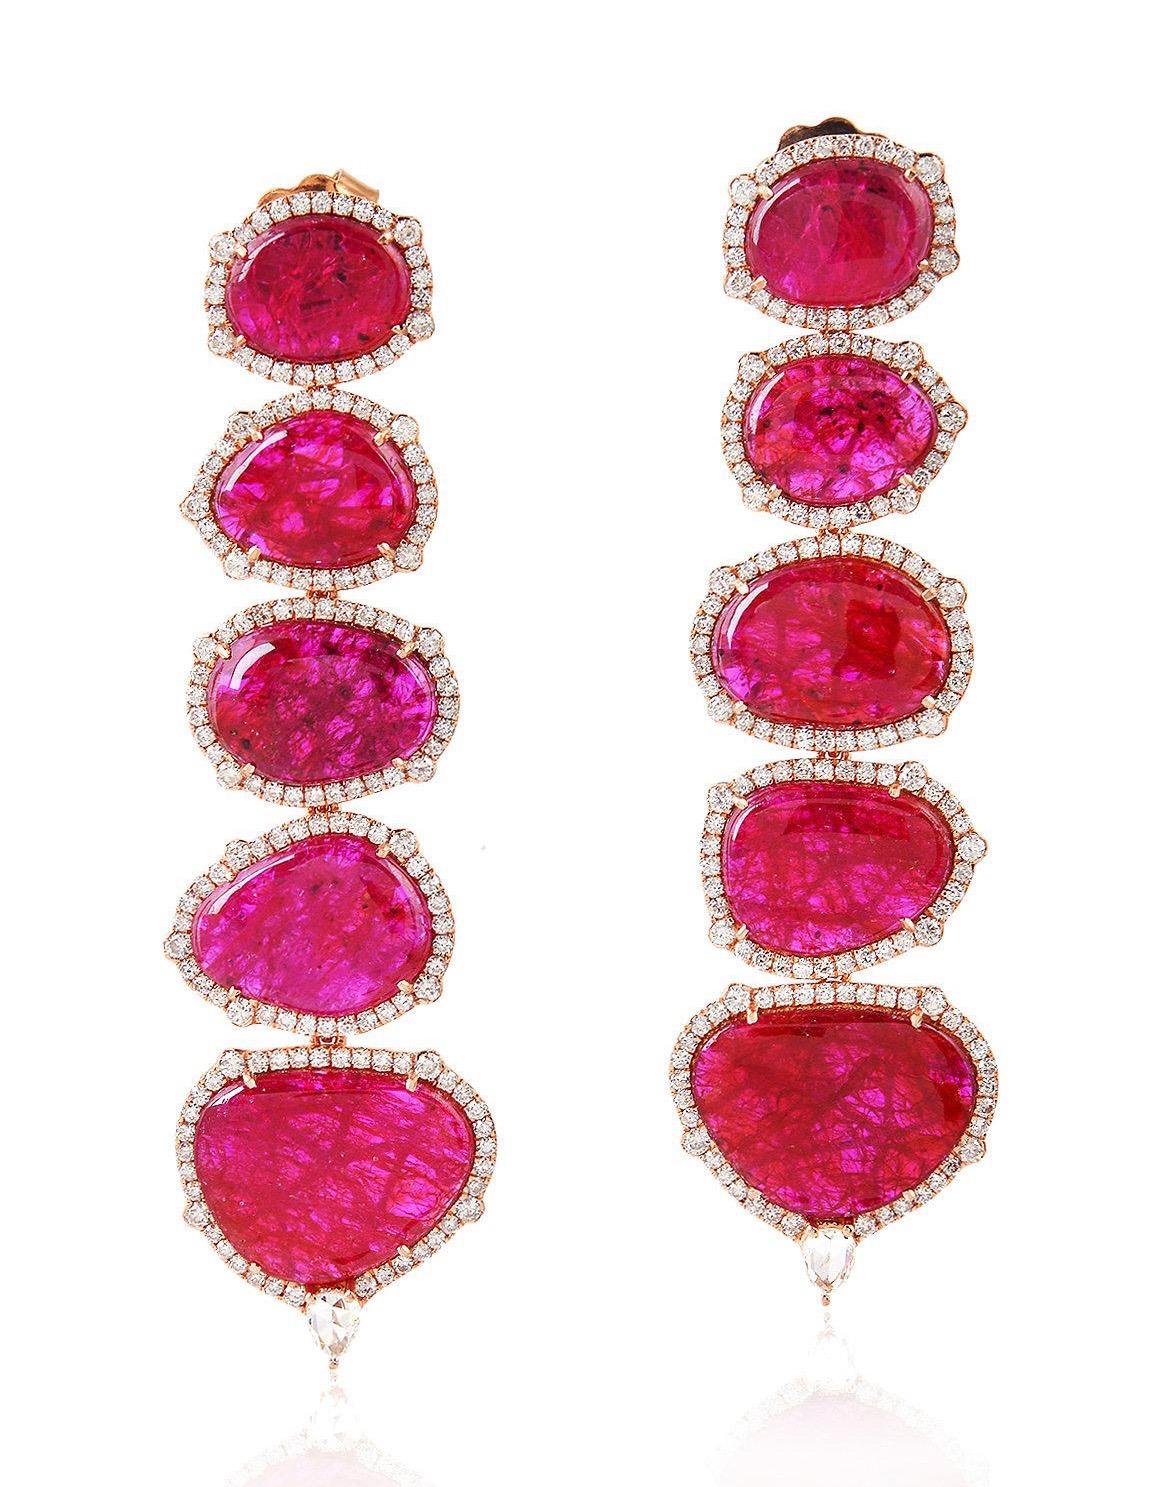 Cabochon 29.98 Carat Ruby Diamond 18 Karat Gold Earrings For Sale